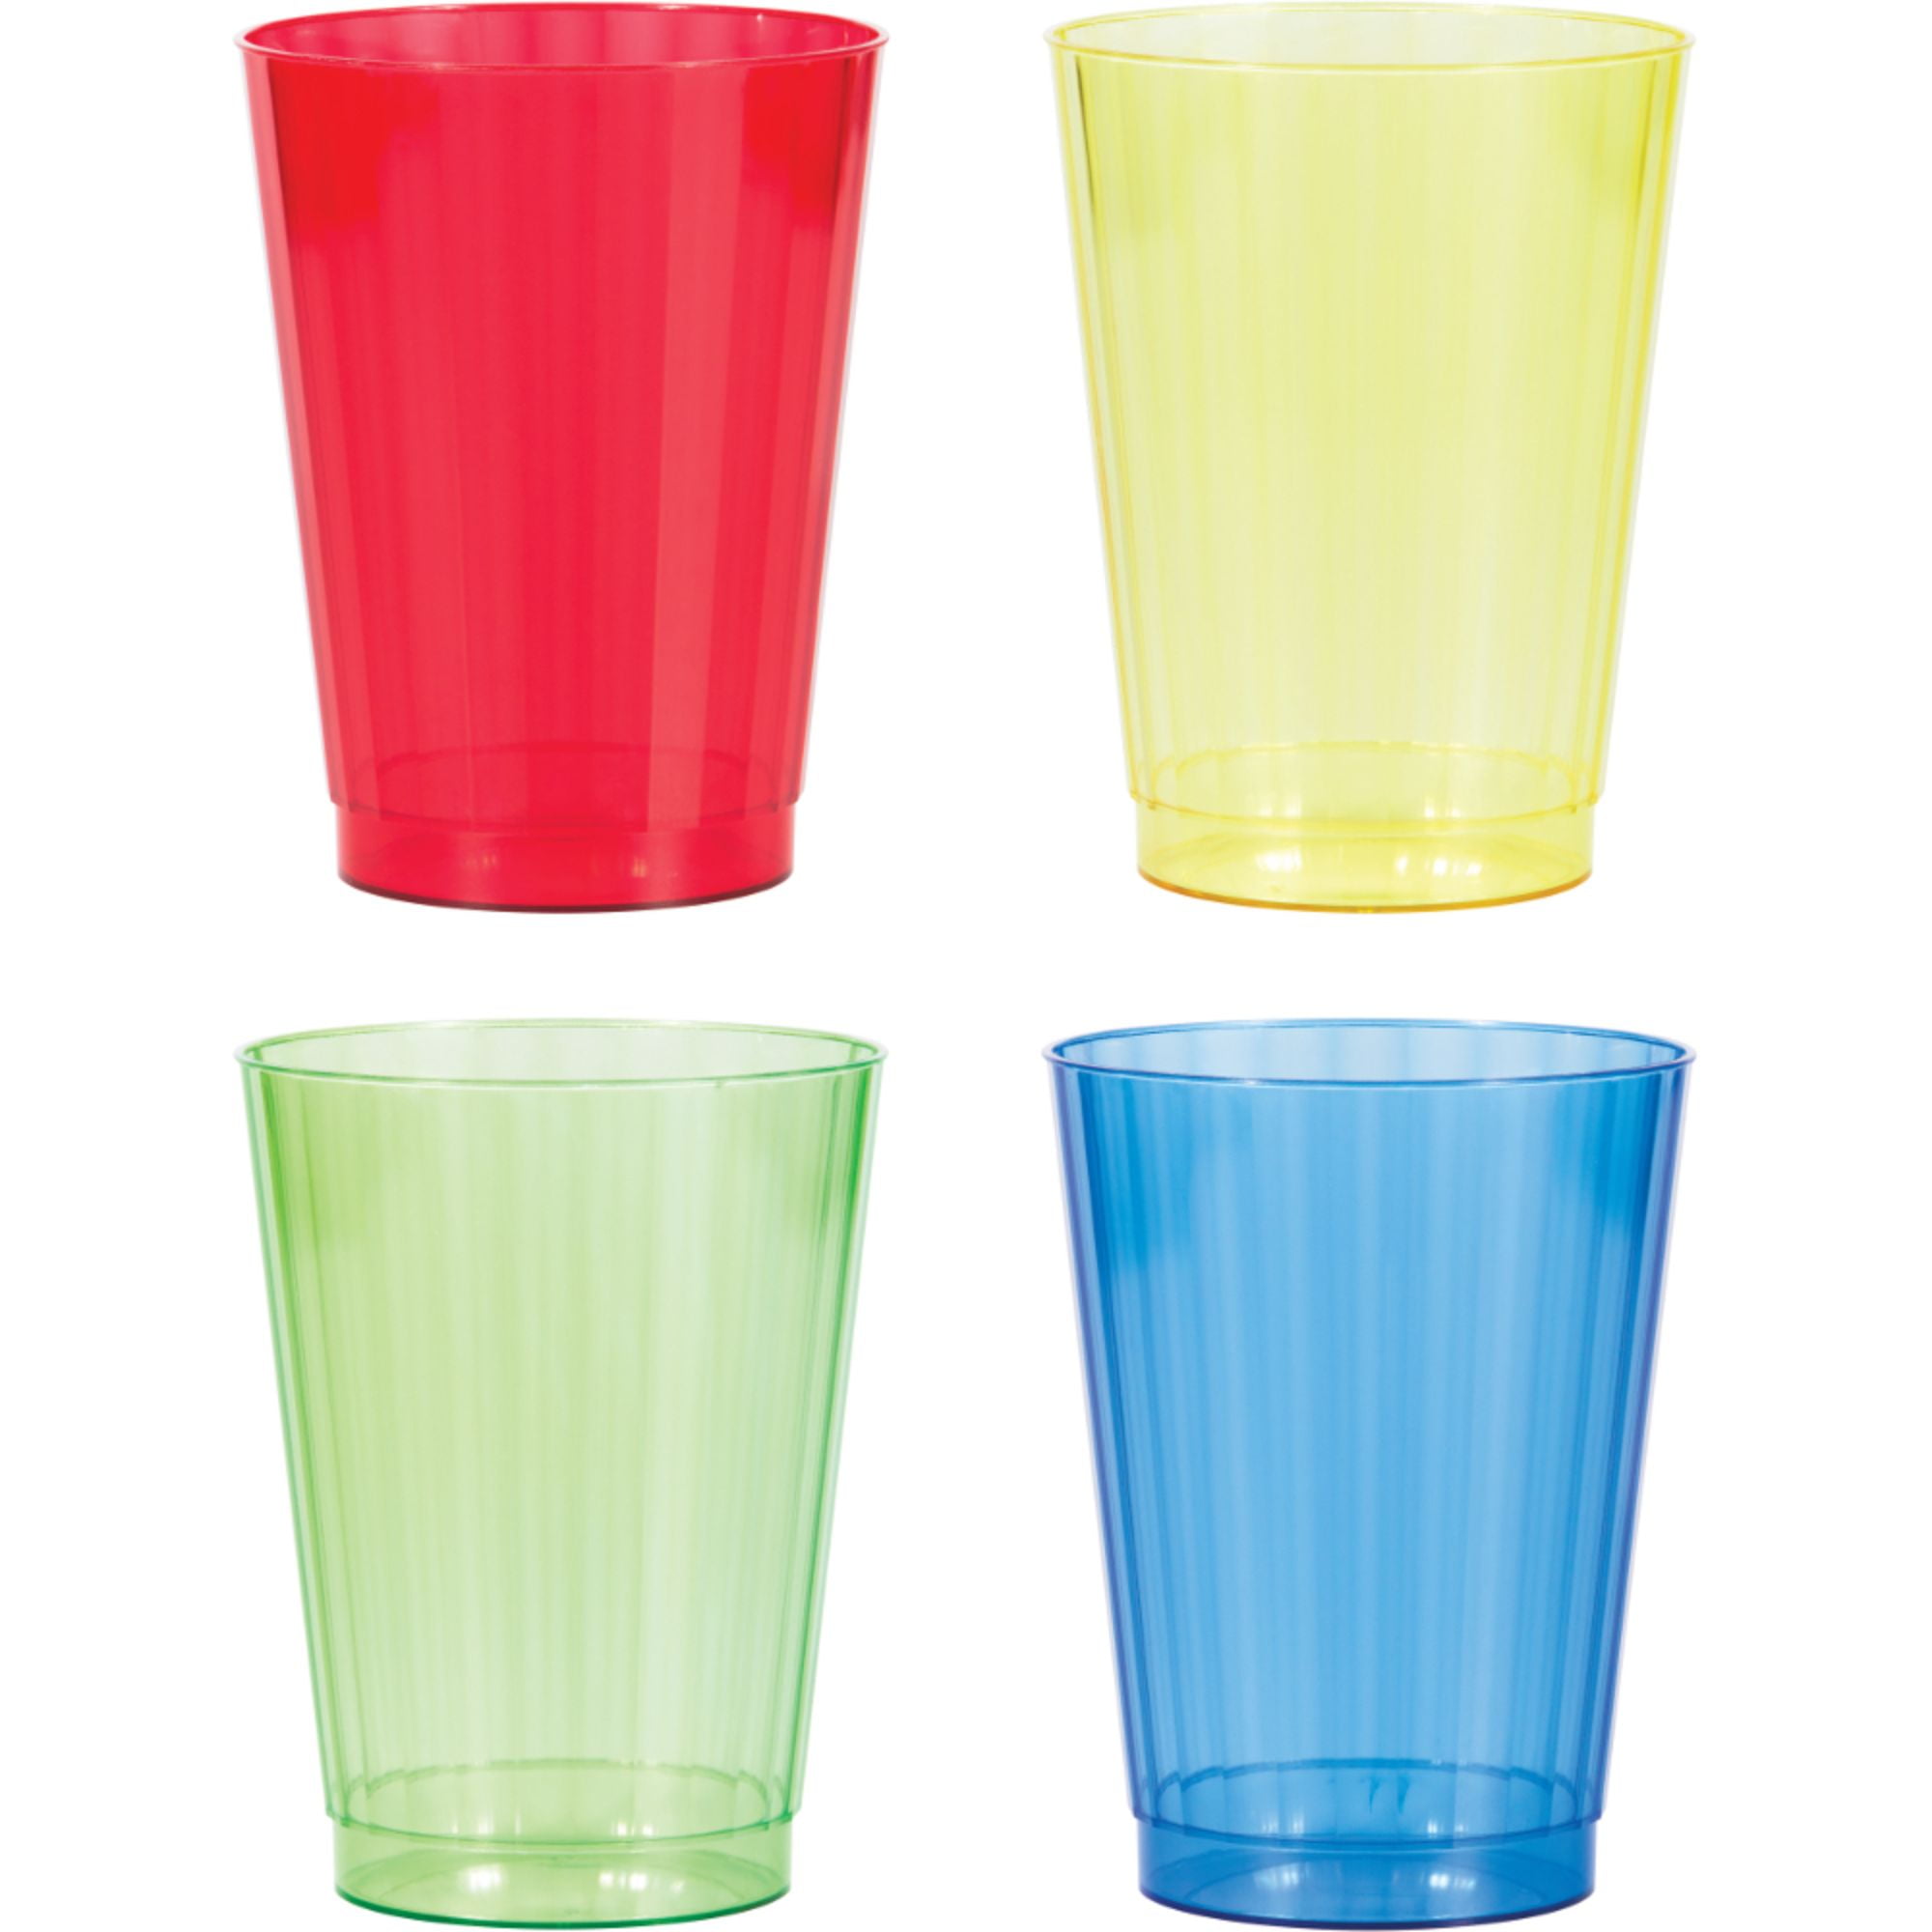 Biodegradable Plastic Cups Canada